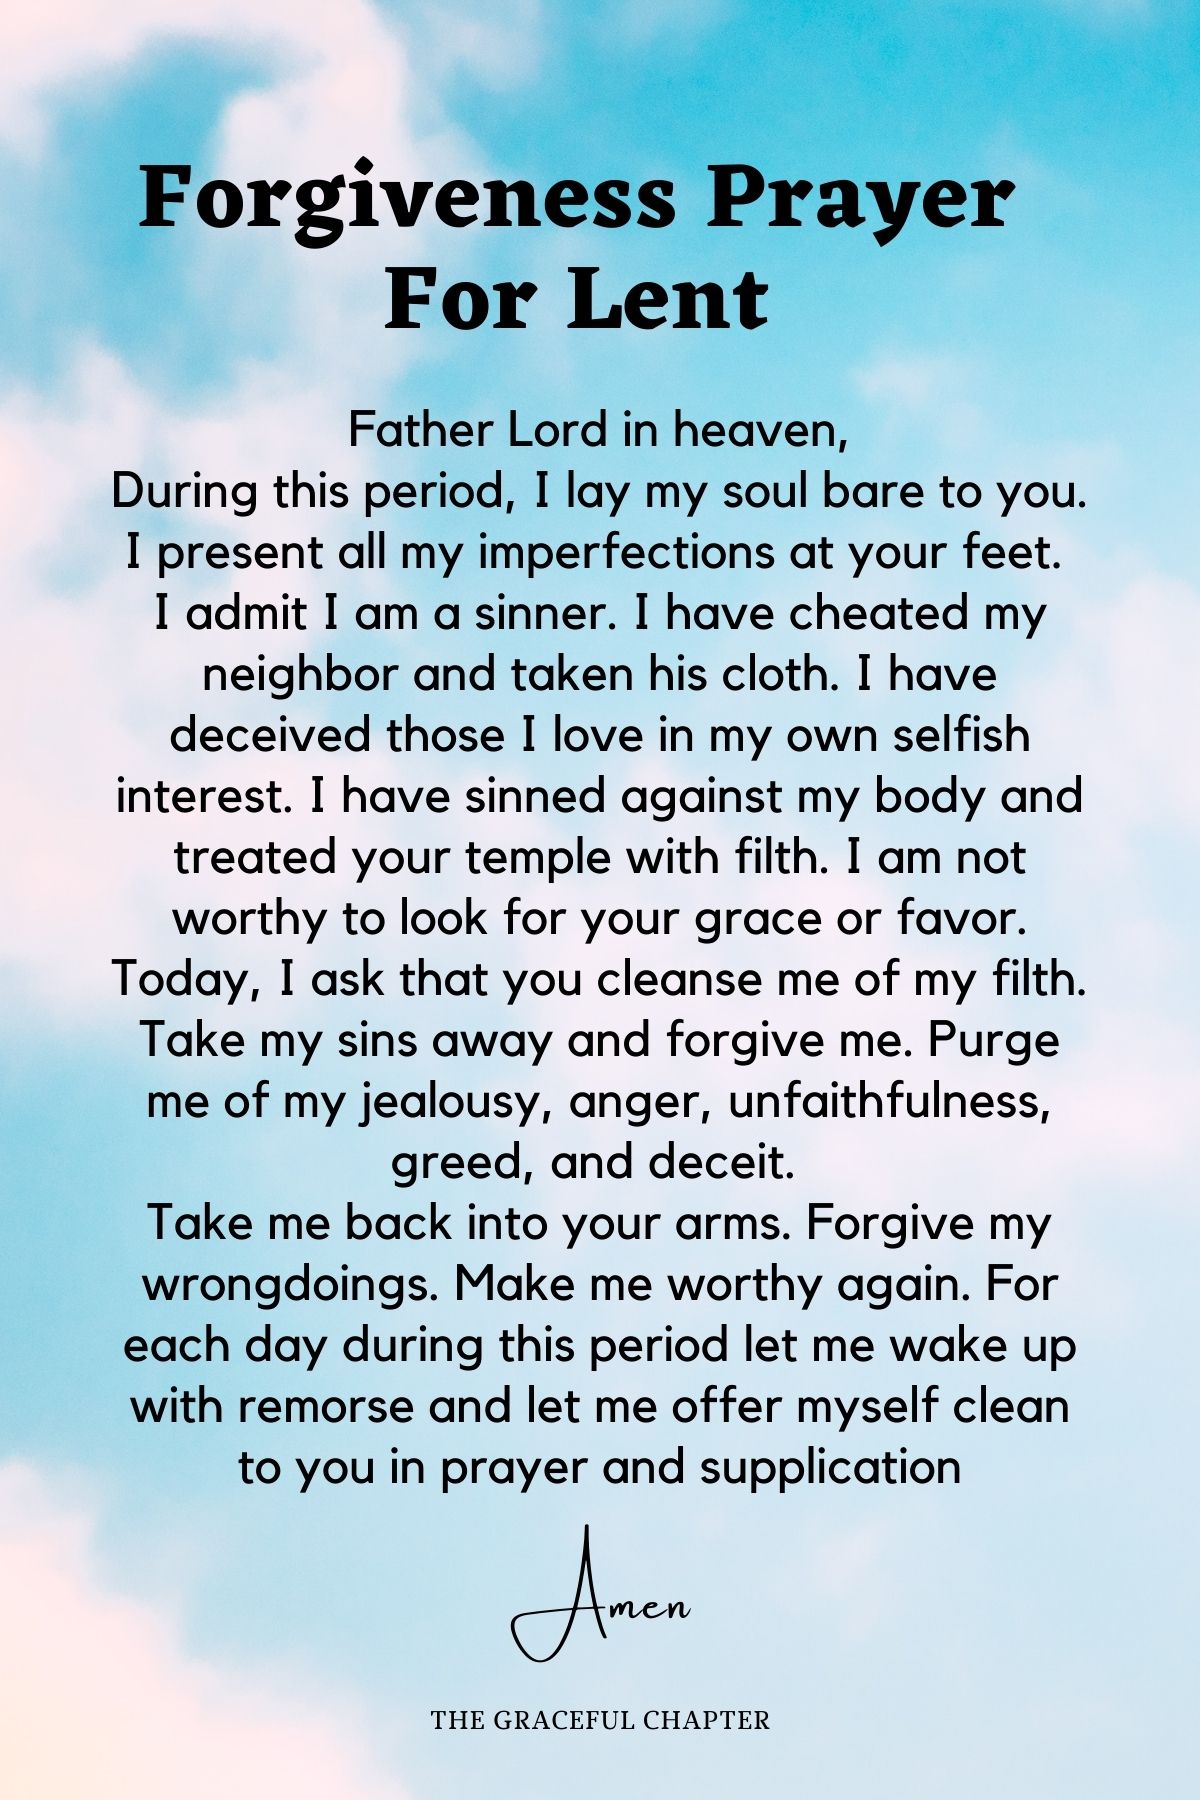 Forgiveness prayer for lent